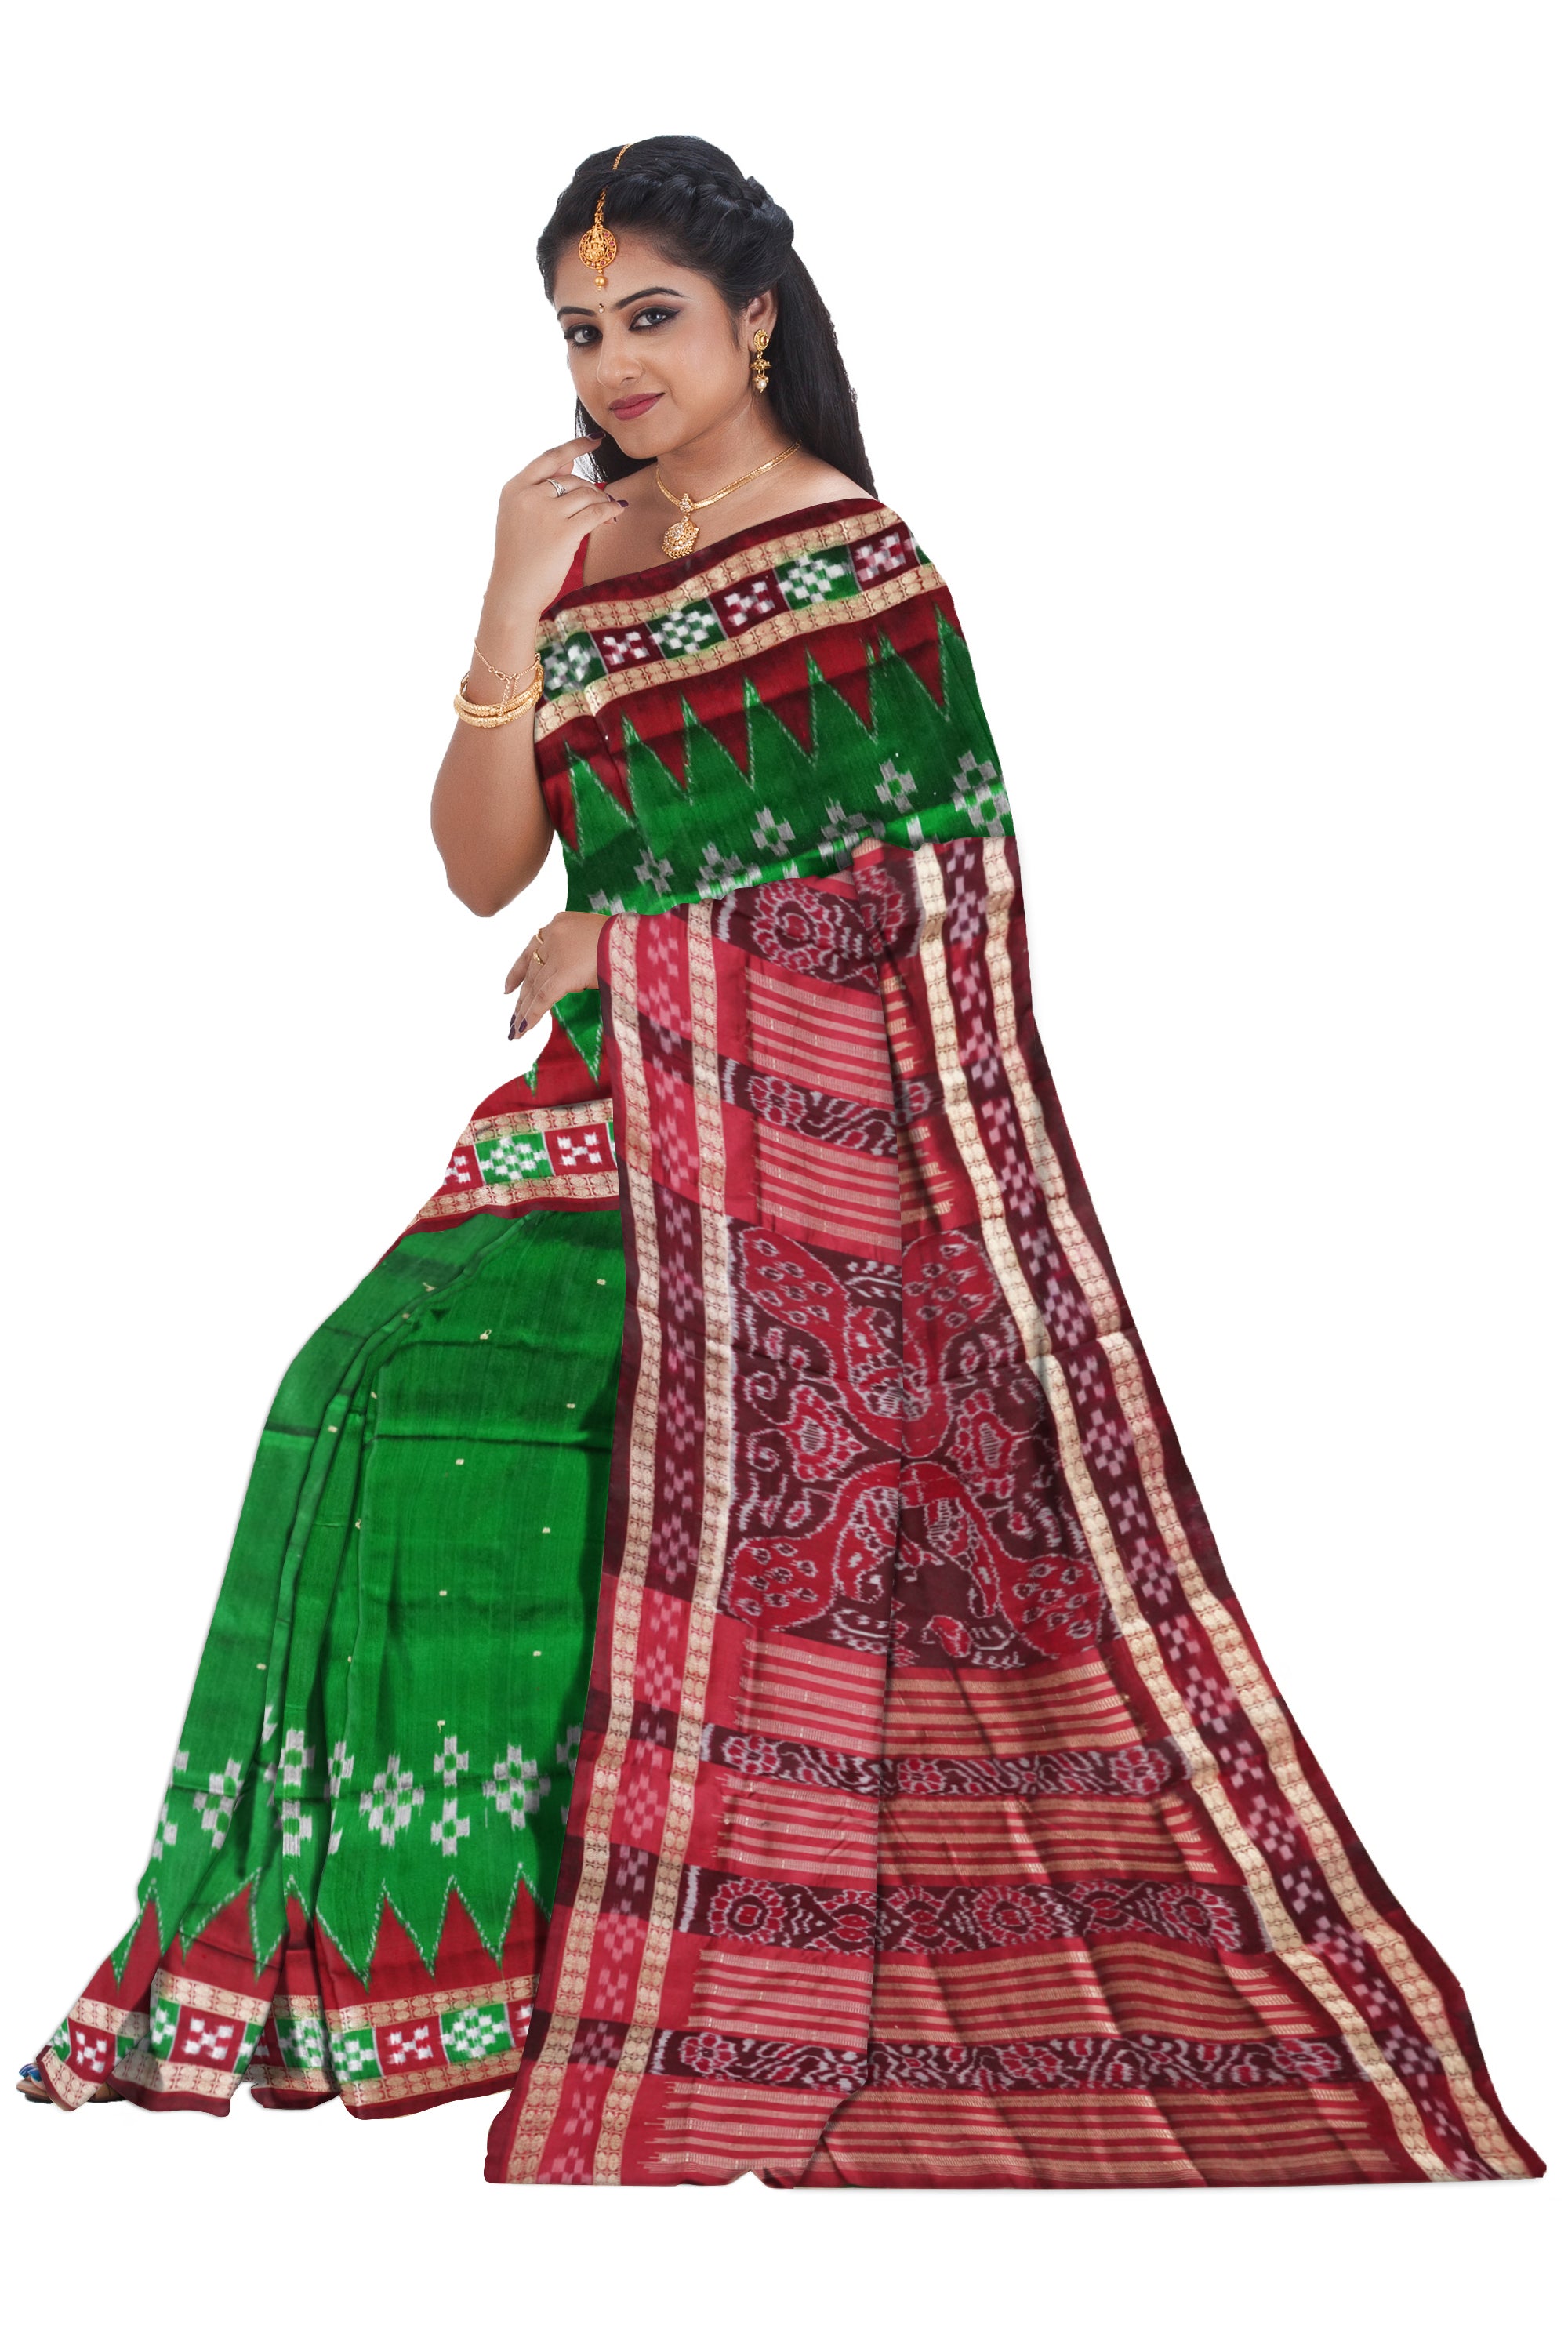 Green & maroon pasapali saree, small booty body, peacock pallu. - Koshali Arts & Crafts Enterprise